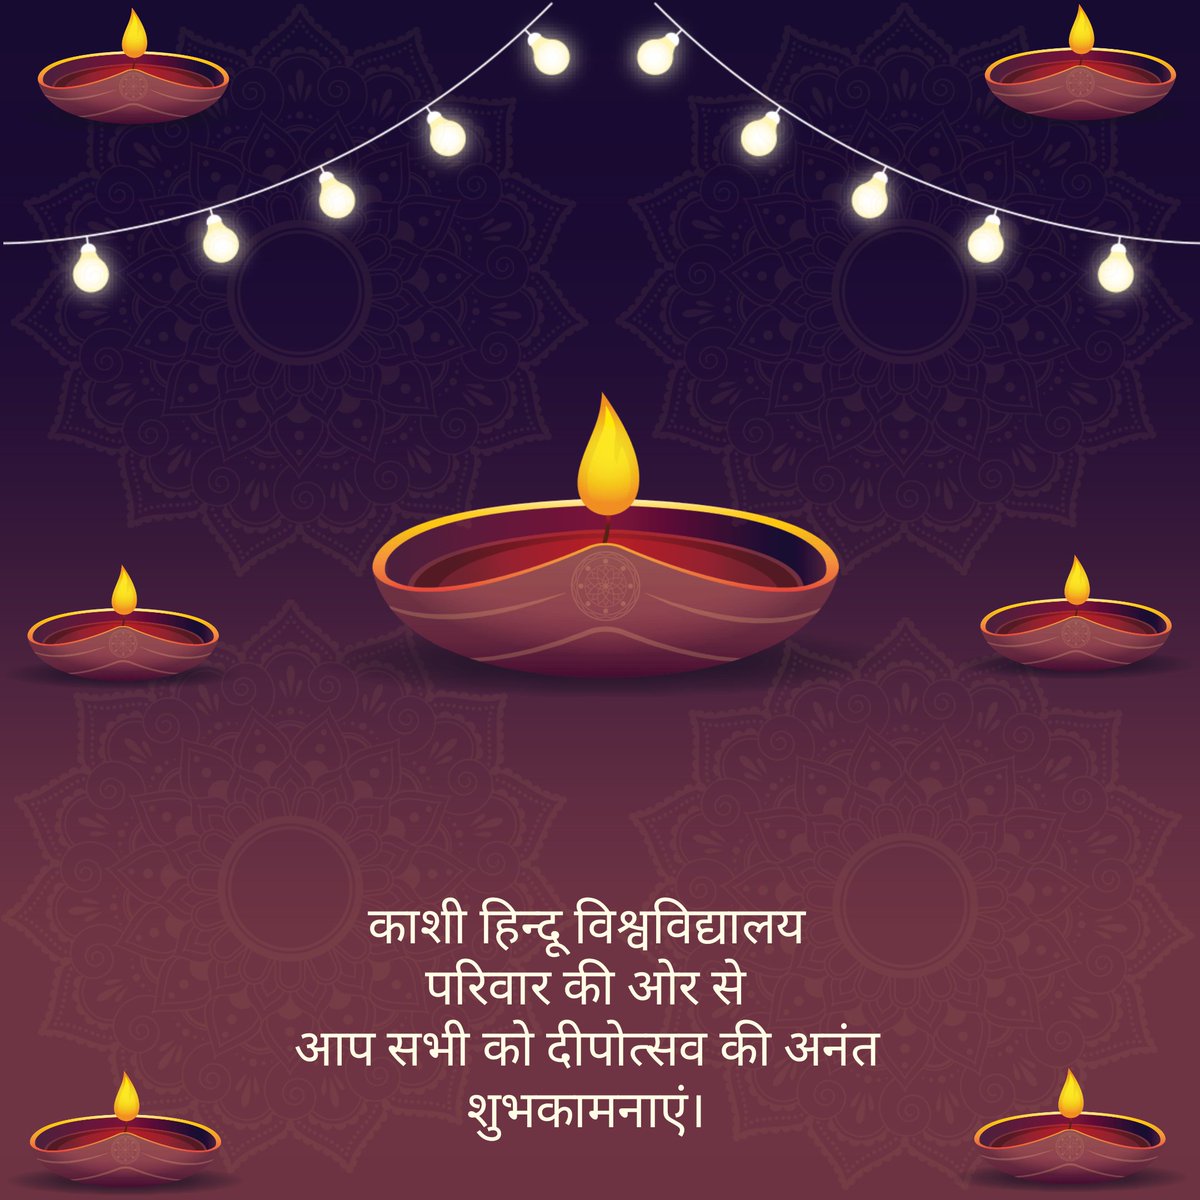 Wishing everyone a very Happy Diwali. आप सभी को दीपावली की ढेरों शुभकामनाएं। #Diwali2022 #HappyDeepavali #Deepawali #BHU #BanarasHinduUniversity